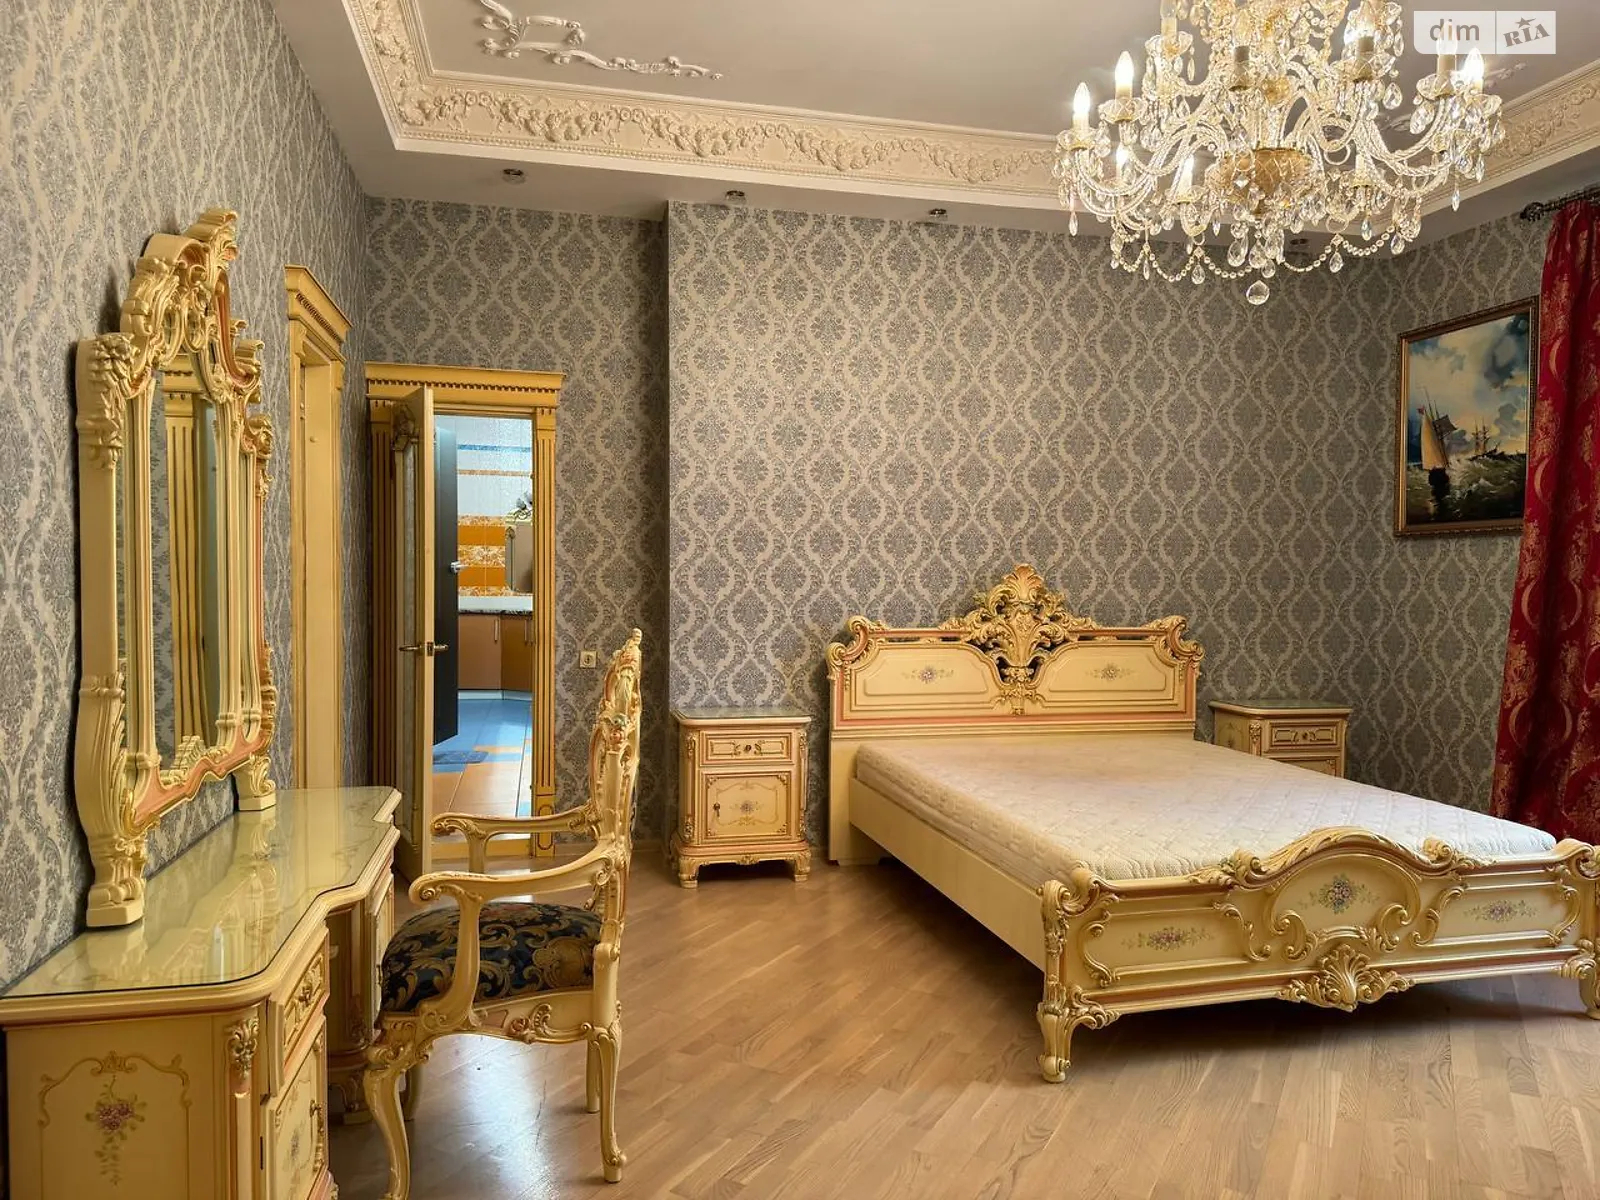 2-кімнатна квартира 120.4 кв. м у Луцьку, цена: 105000 $ - фото 1